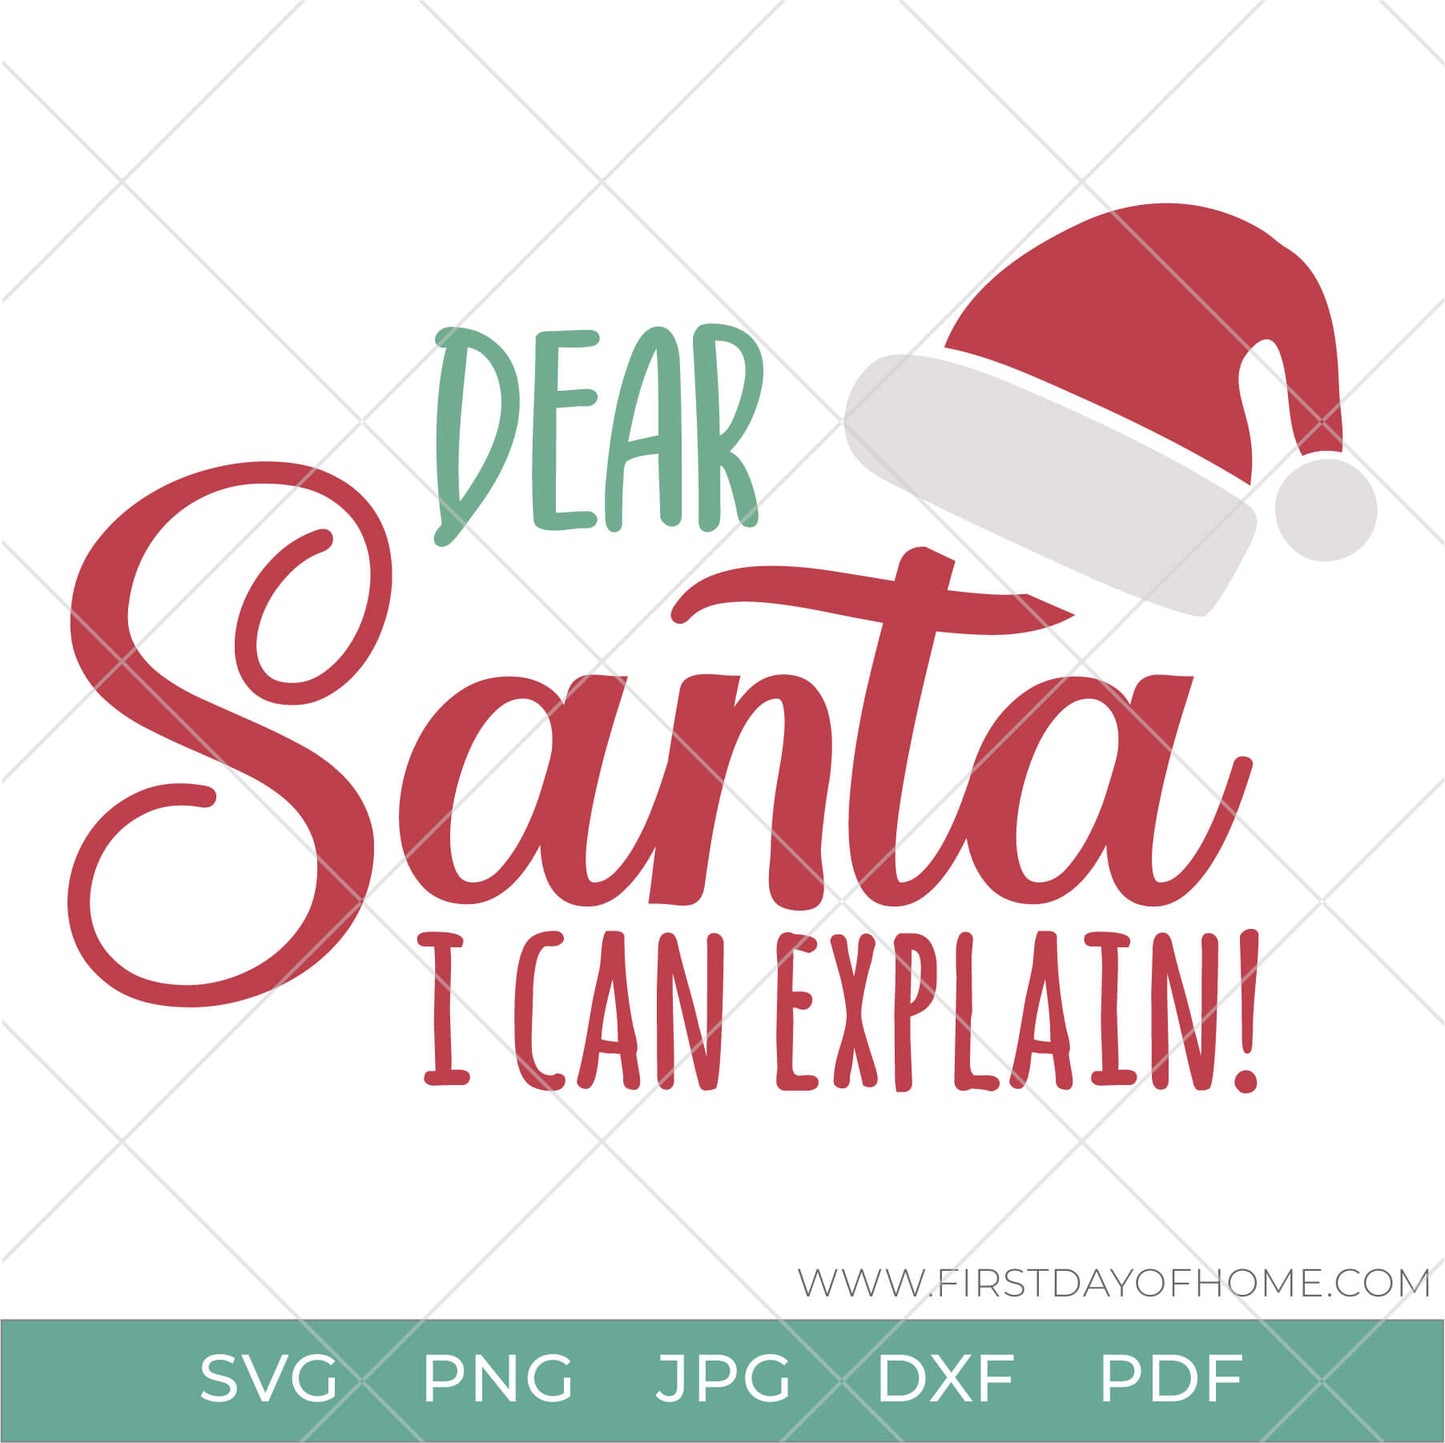 Dear Santa I Can Explain design with Santa hat